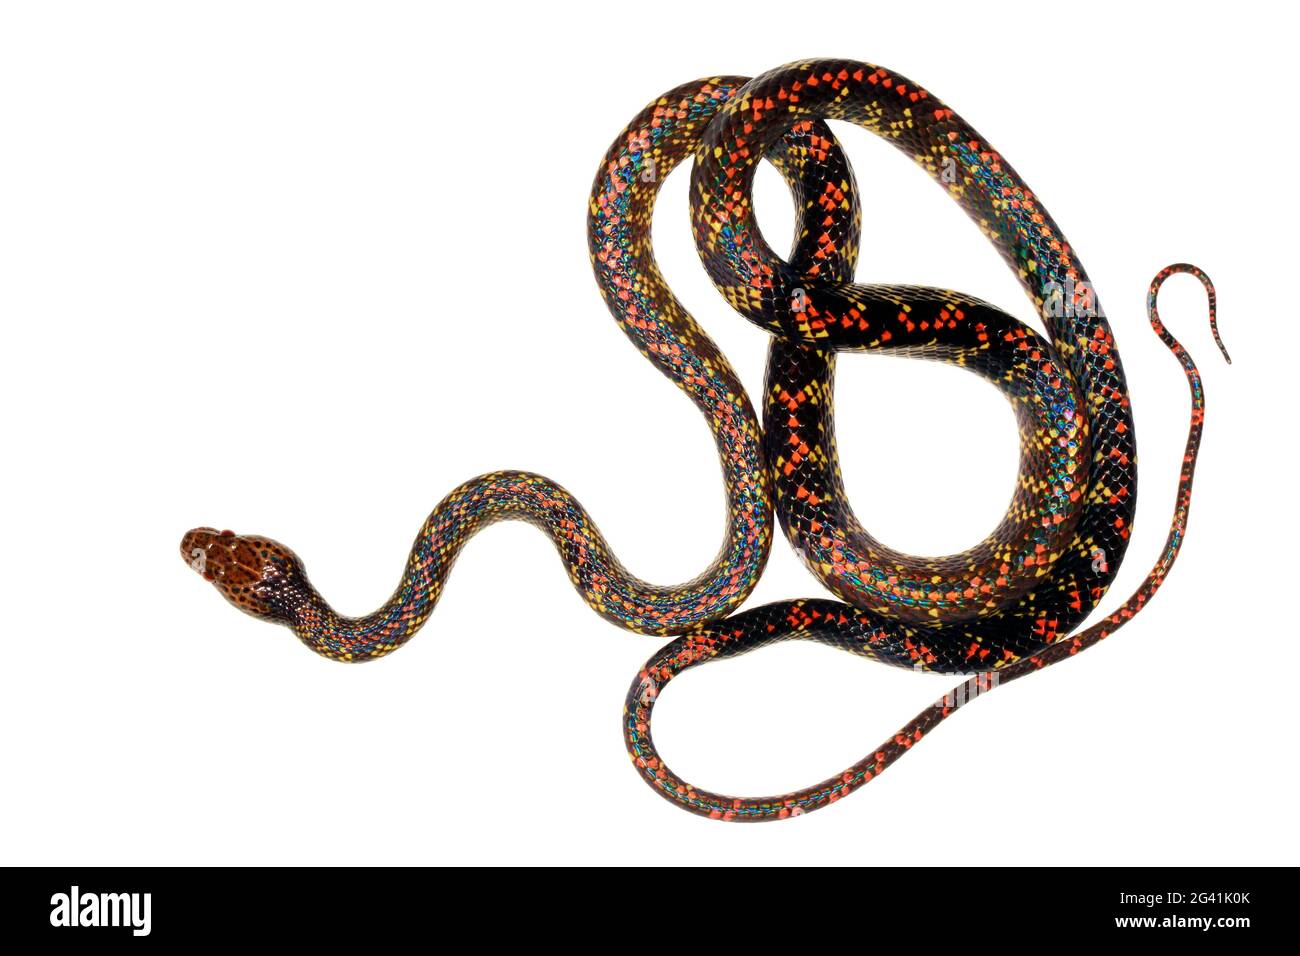 Serpente di Checkerbelly (Siflophis cerspinus), un serpente raro della provincia di Orellana, Ecuador amazzonico Foto Stock